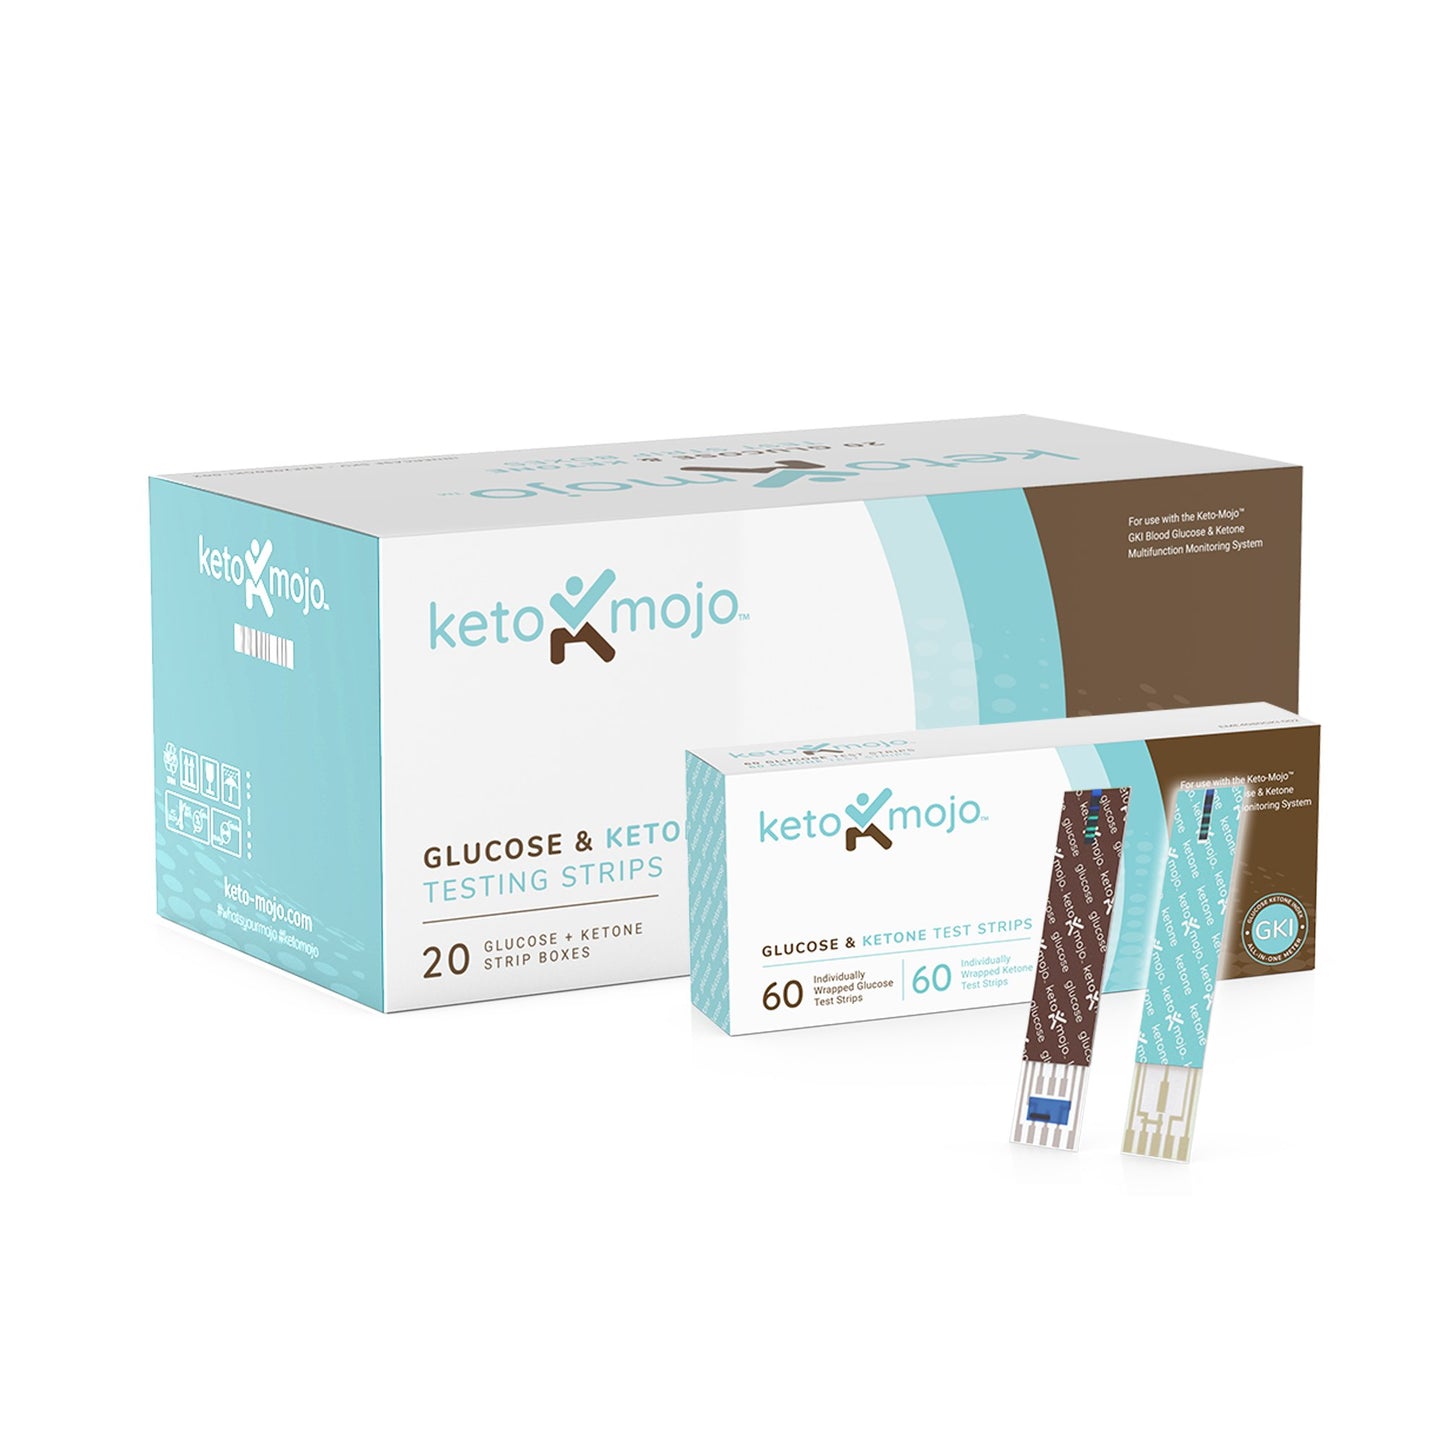 Inner Case GKI Glucose & Ketone Test Strips - THE COMBO PACK (20 units)